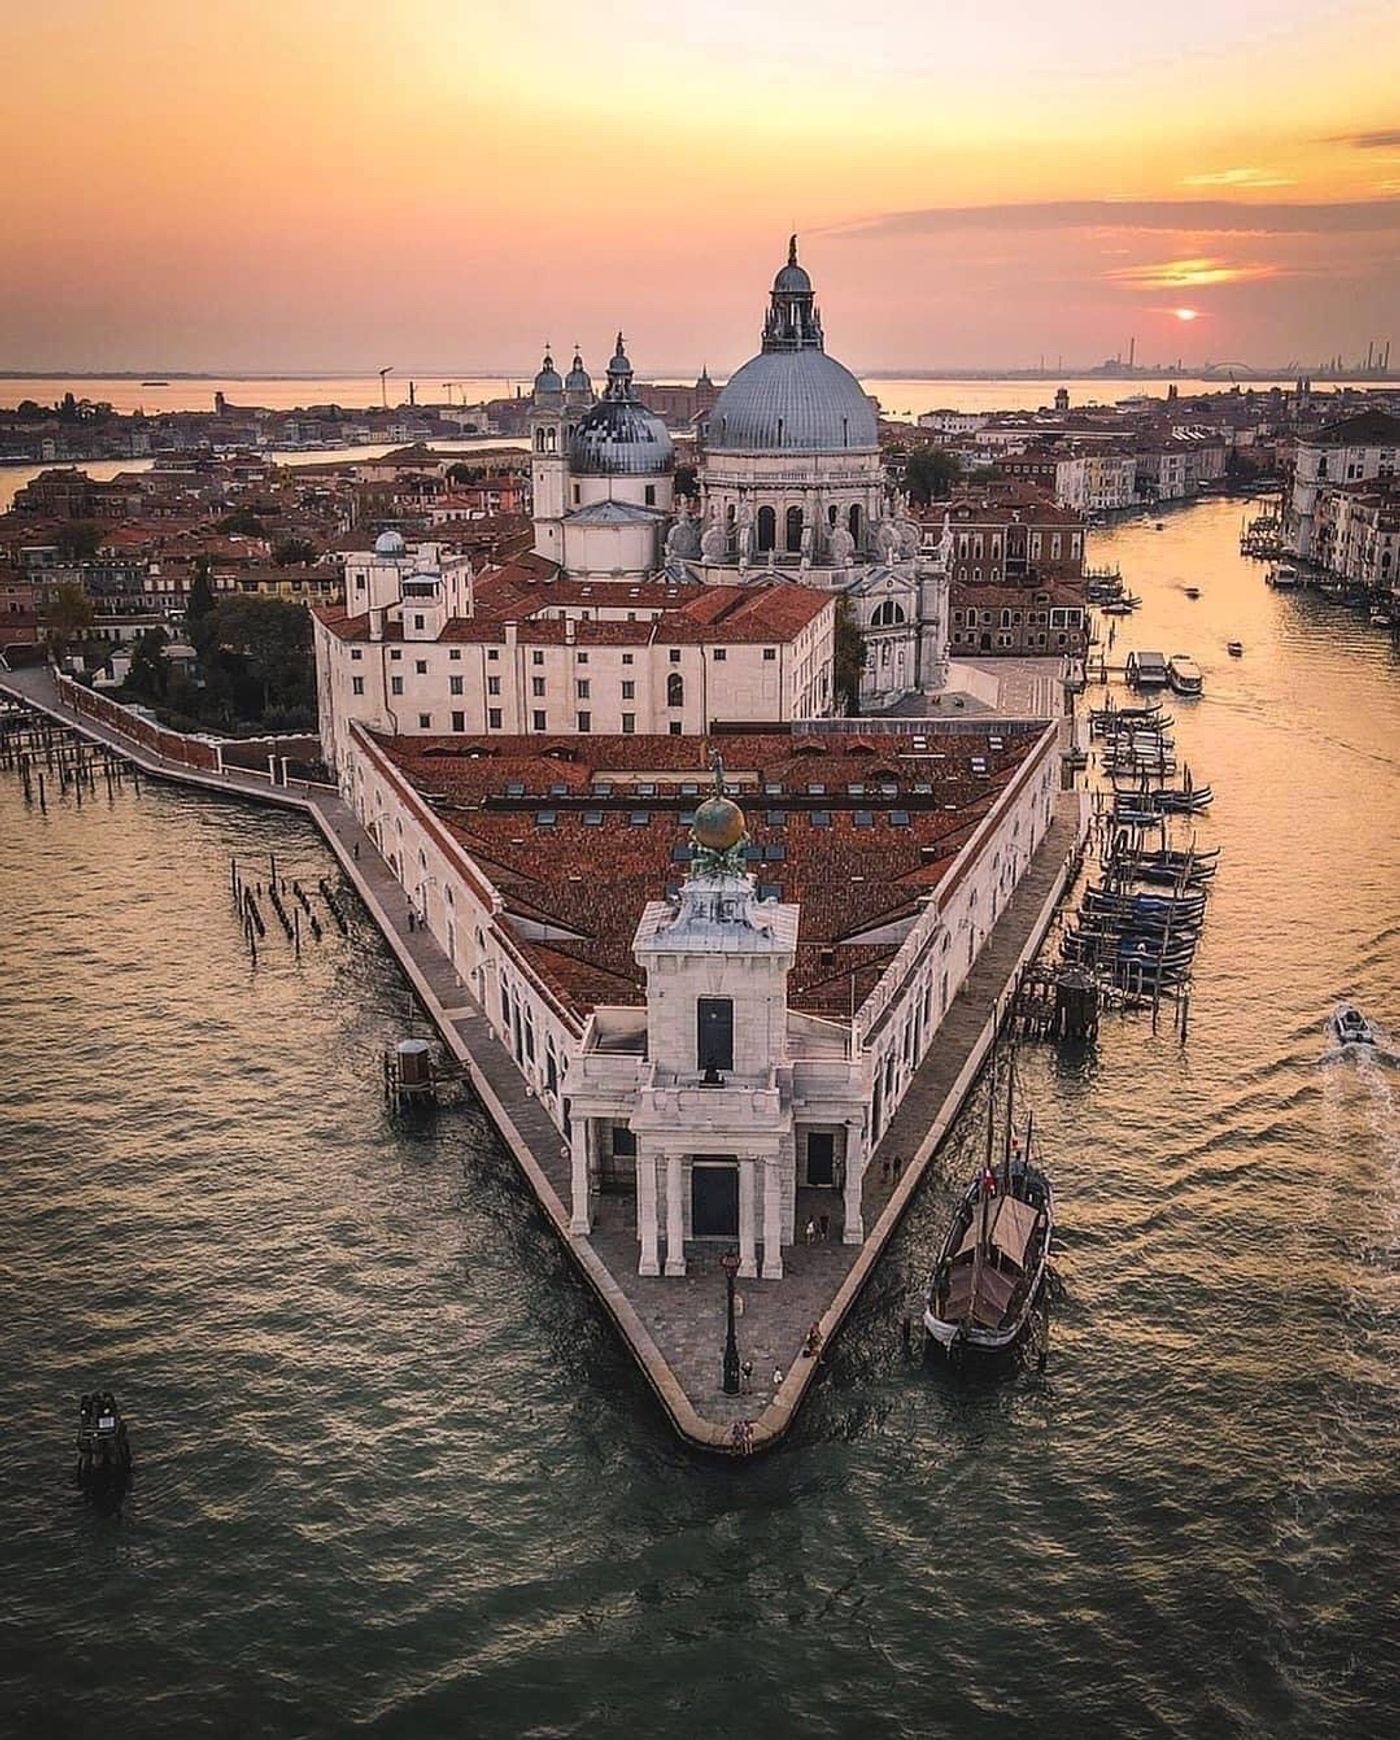 Das lebendige Wasser Venedigs